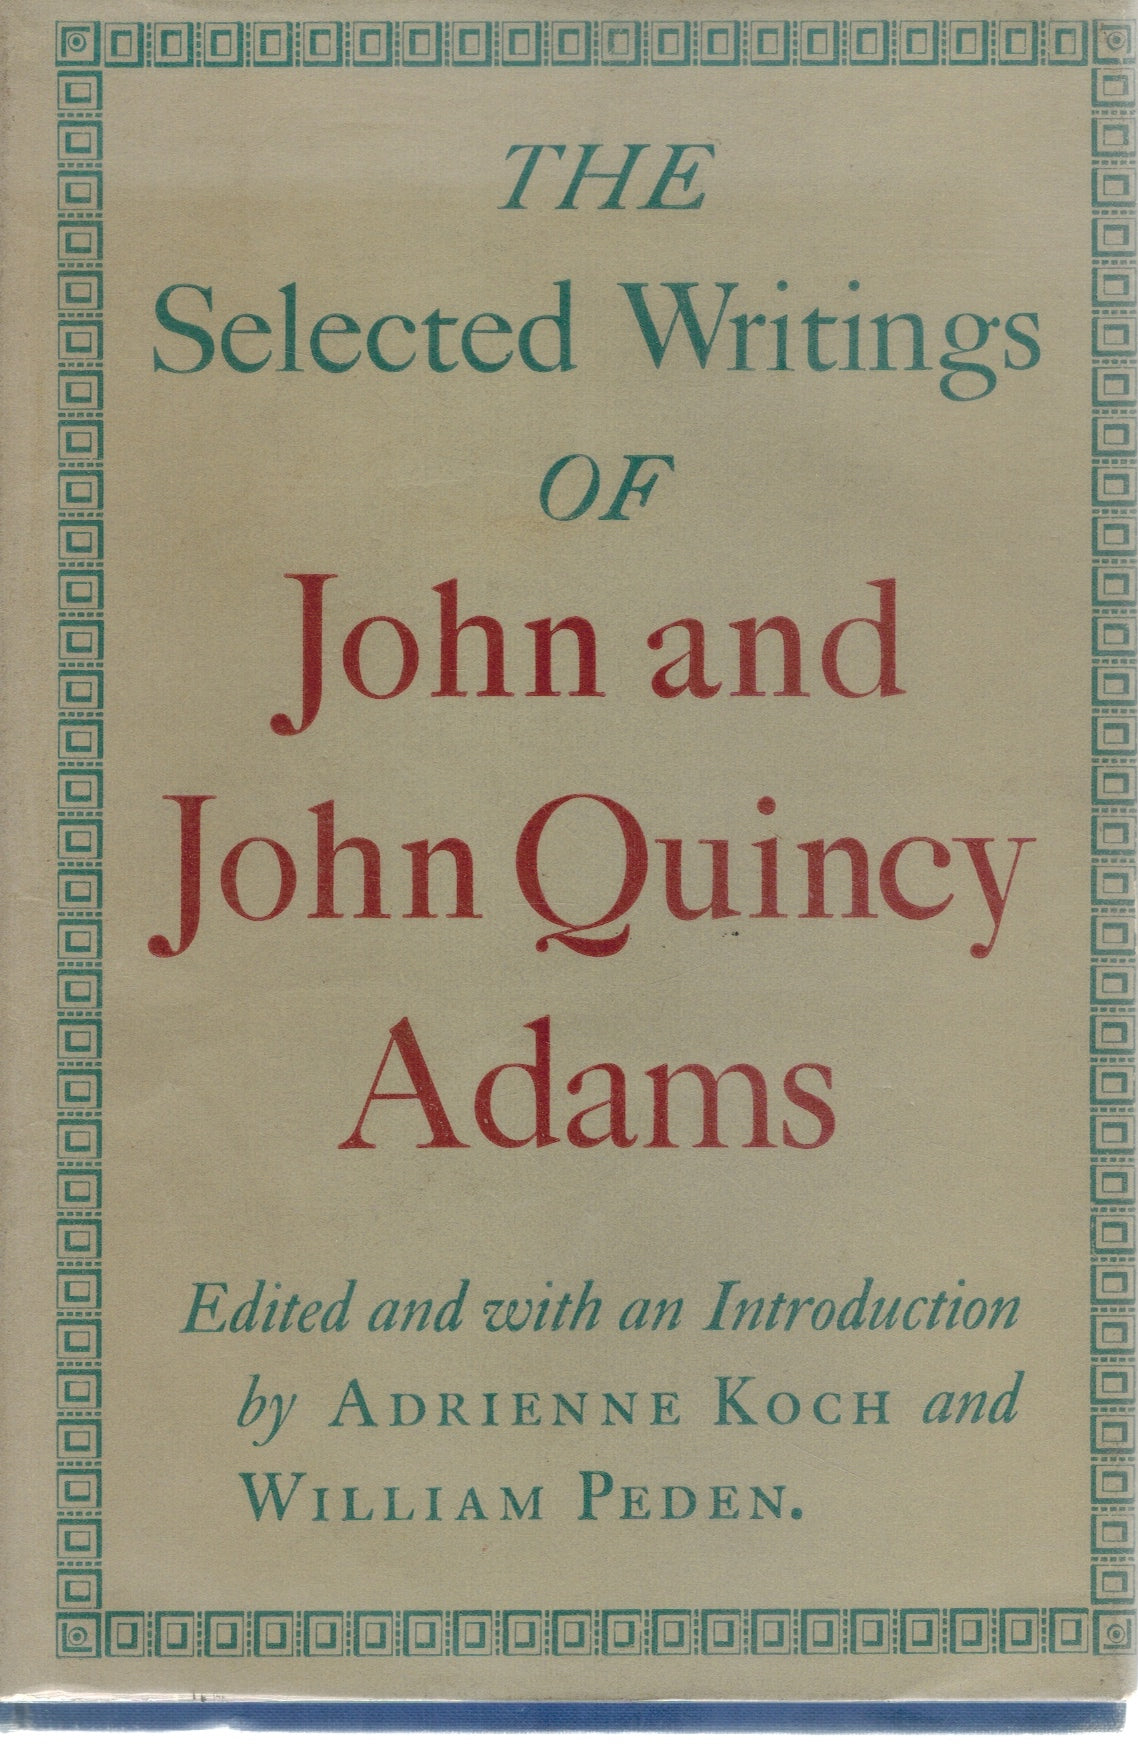 THE SELECTED WRITINGS OF JOHN AND JOHN QUINCY ADAMS